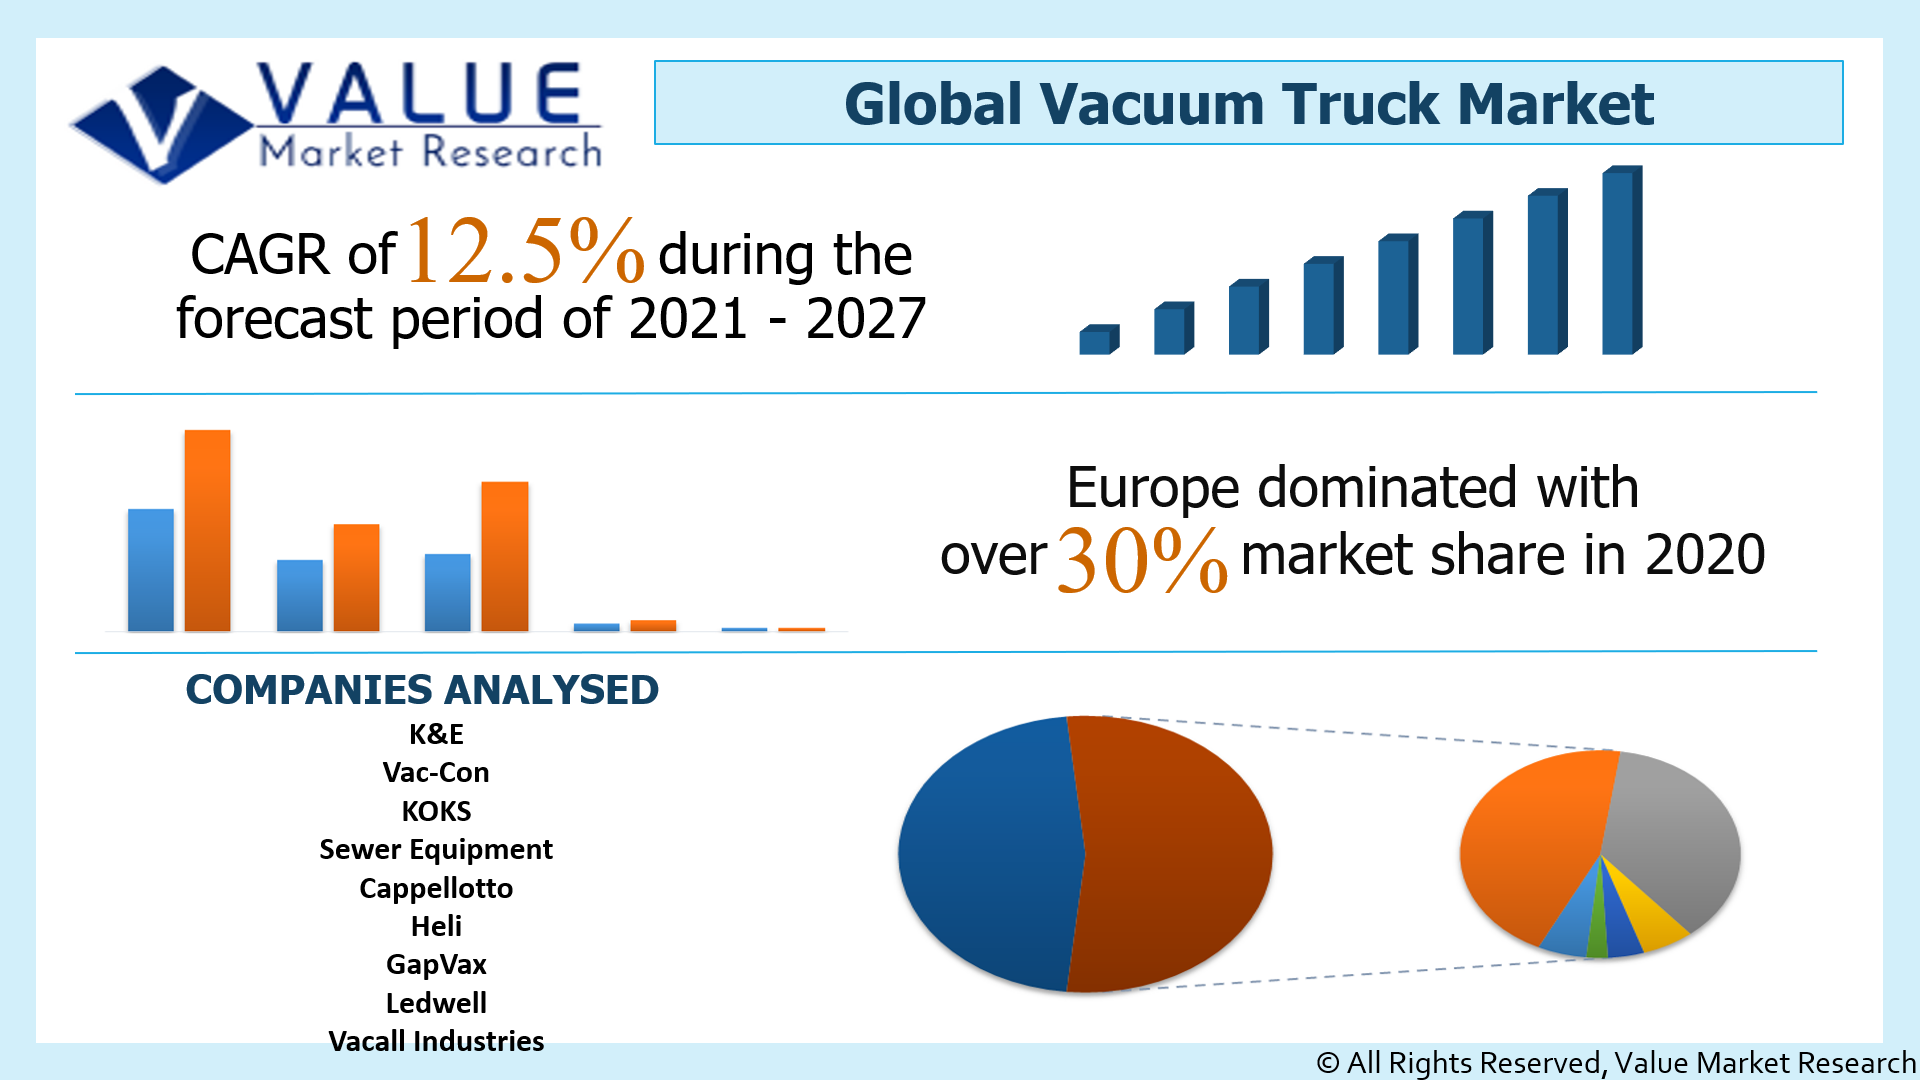 Global Vacuum Truck Market Share